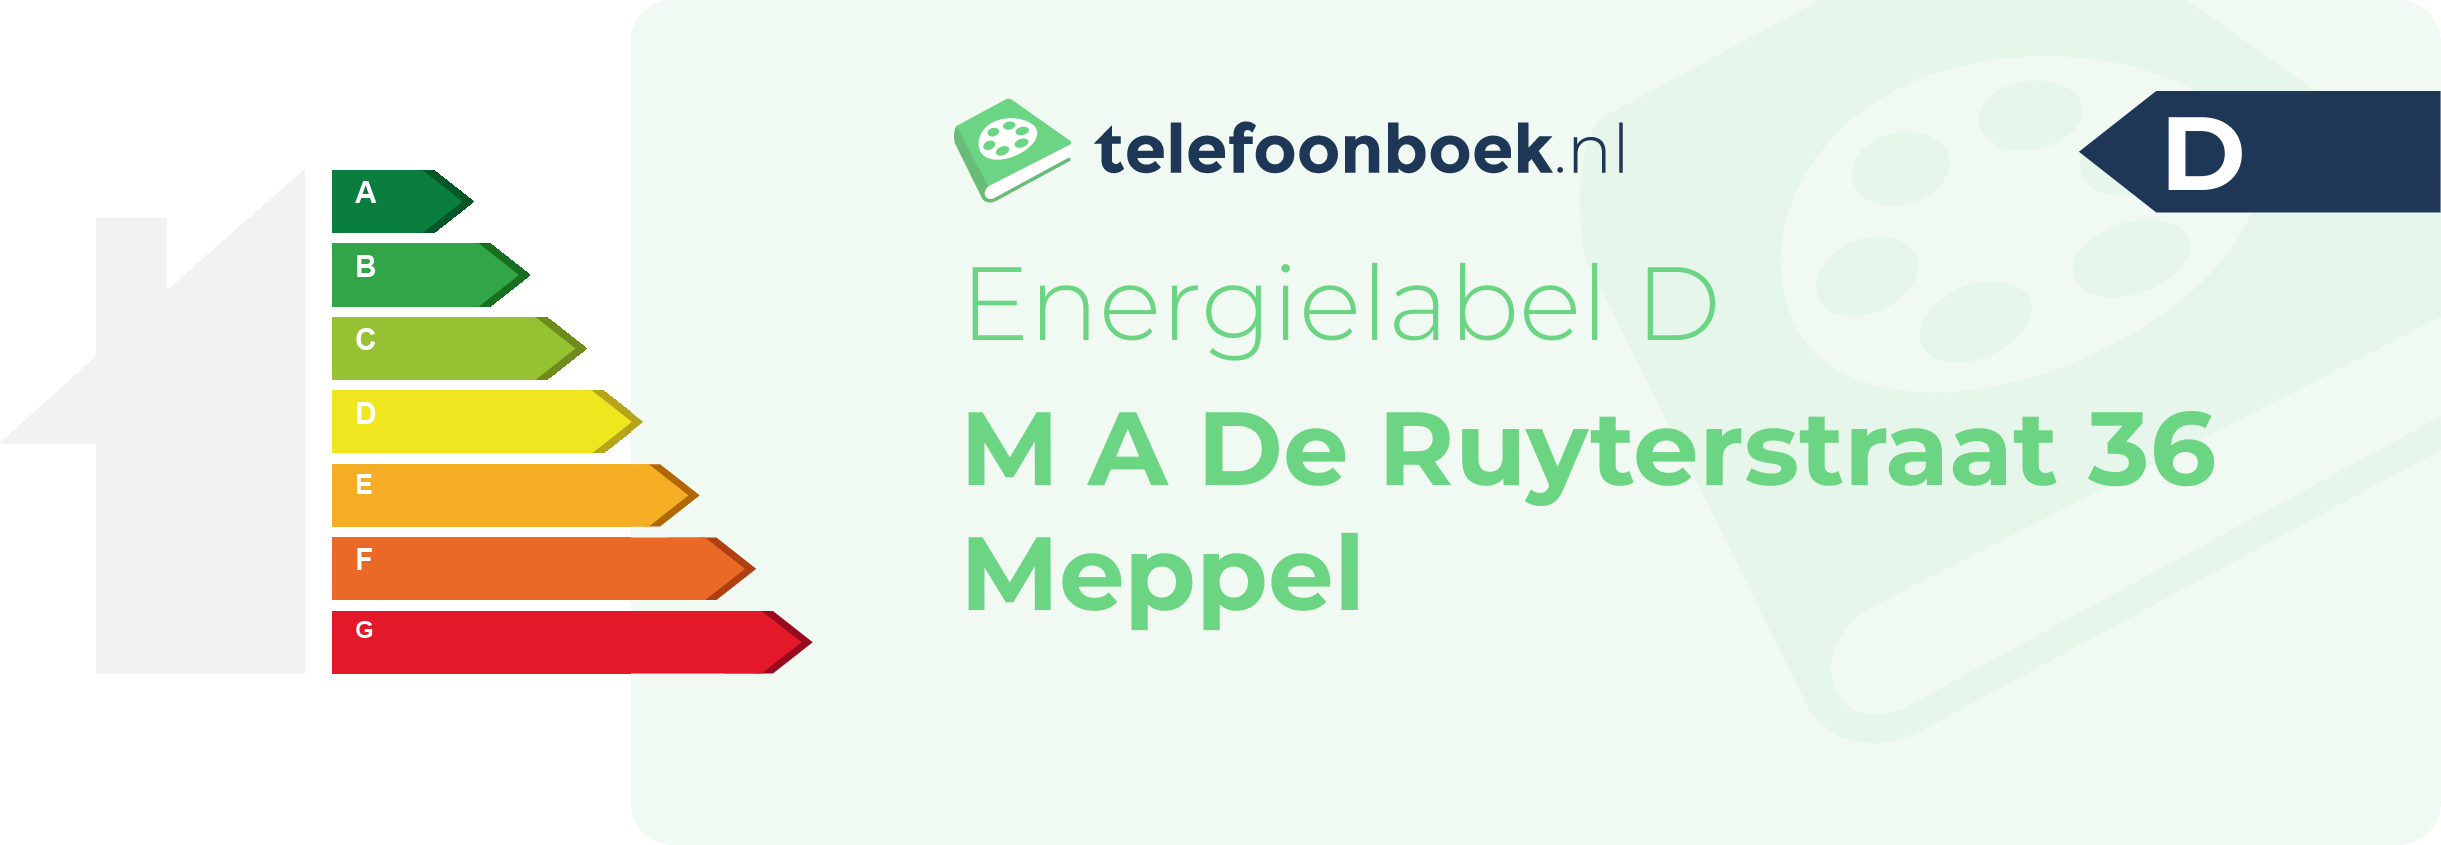 Energielabel M A De Ruyterstraat 36 Meppel